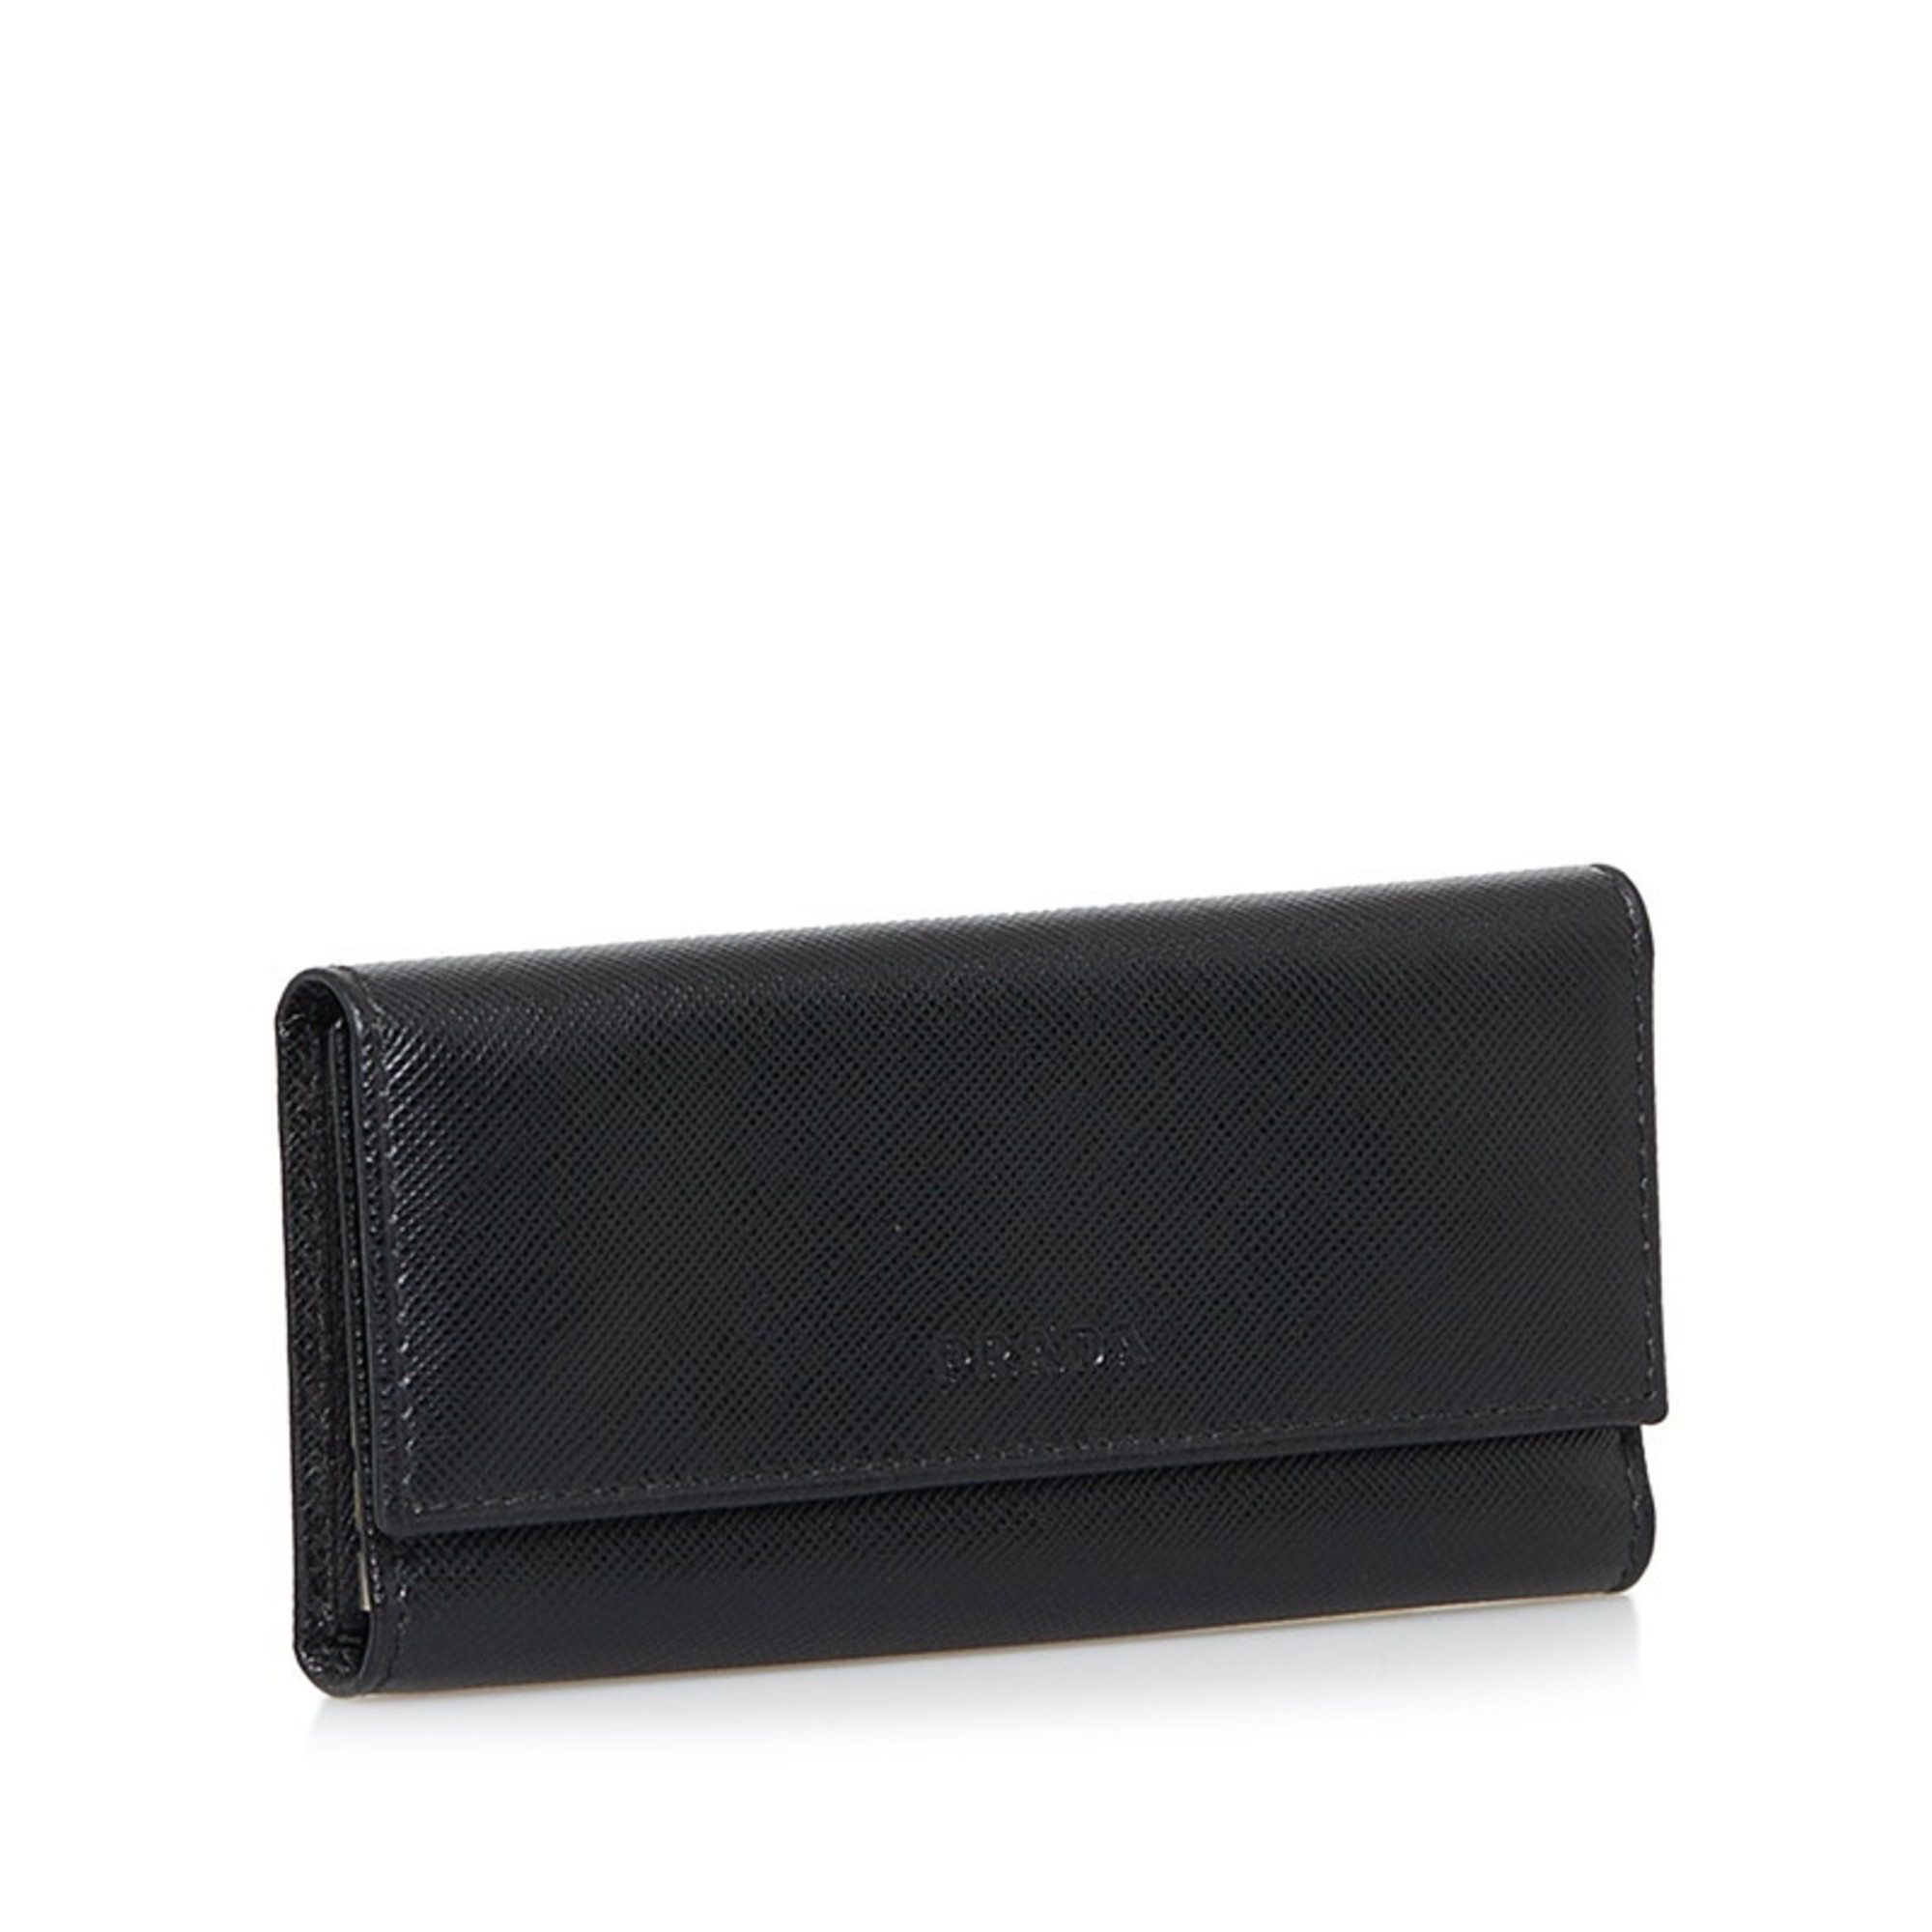 Prada Saffiano 6-ring key case, black leather, for women, PRADA